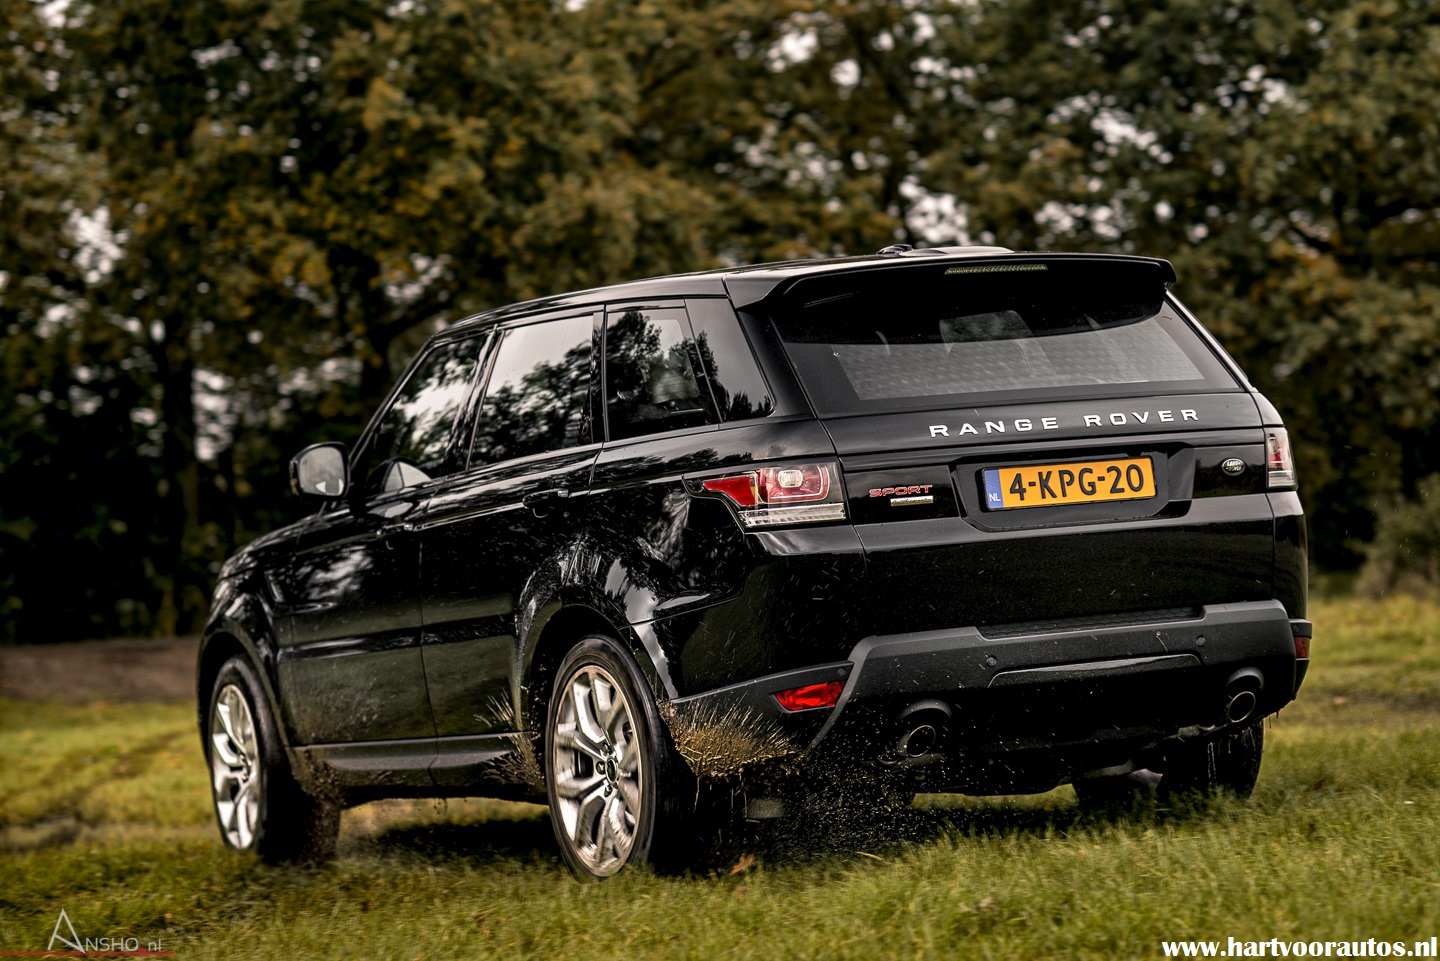 Dubbelzinnigheid Dalset regeren Range Rover Sport V8 rijden - VVC